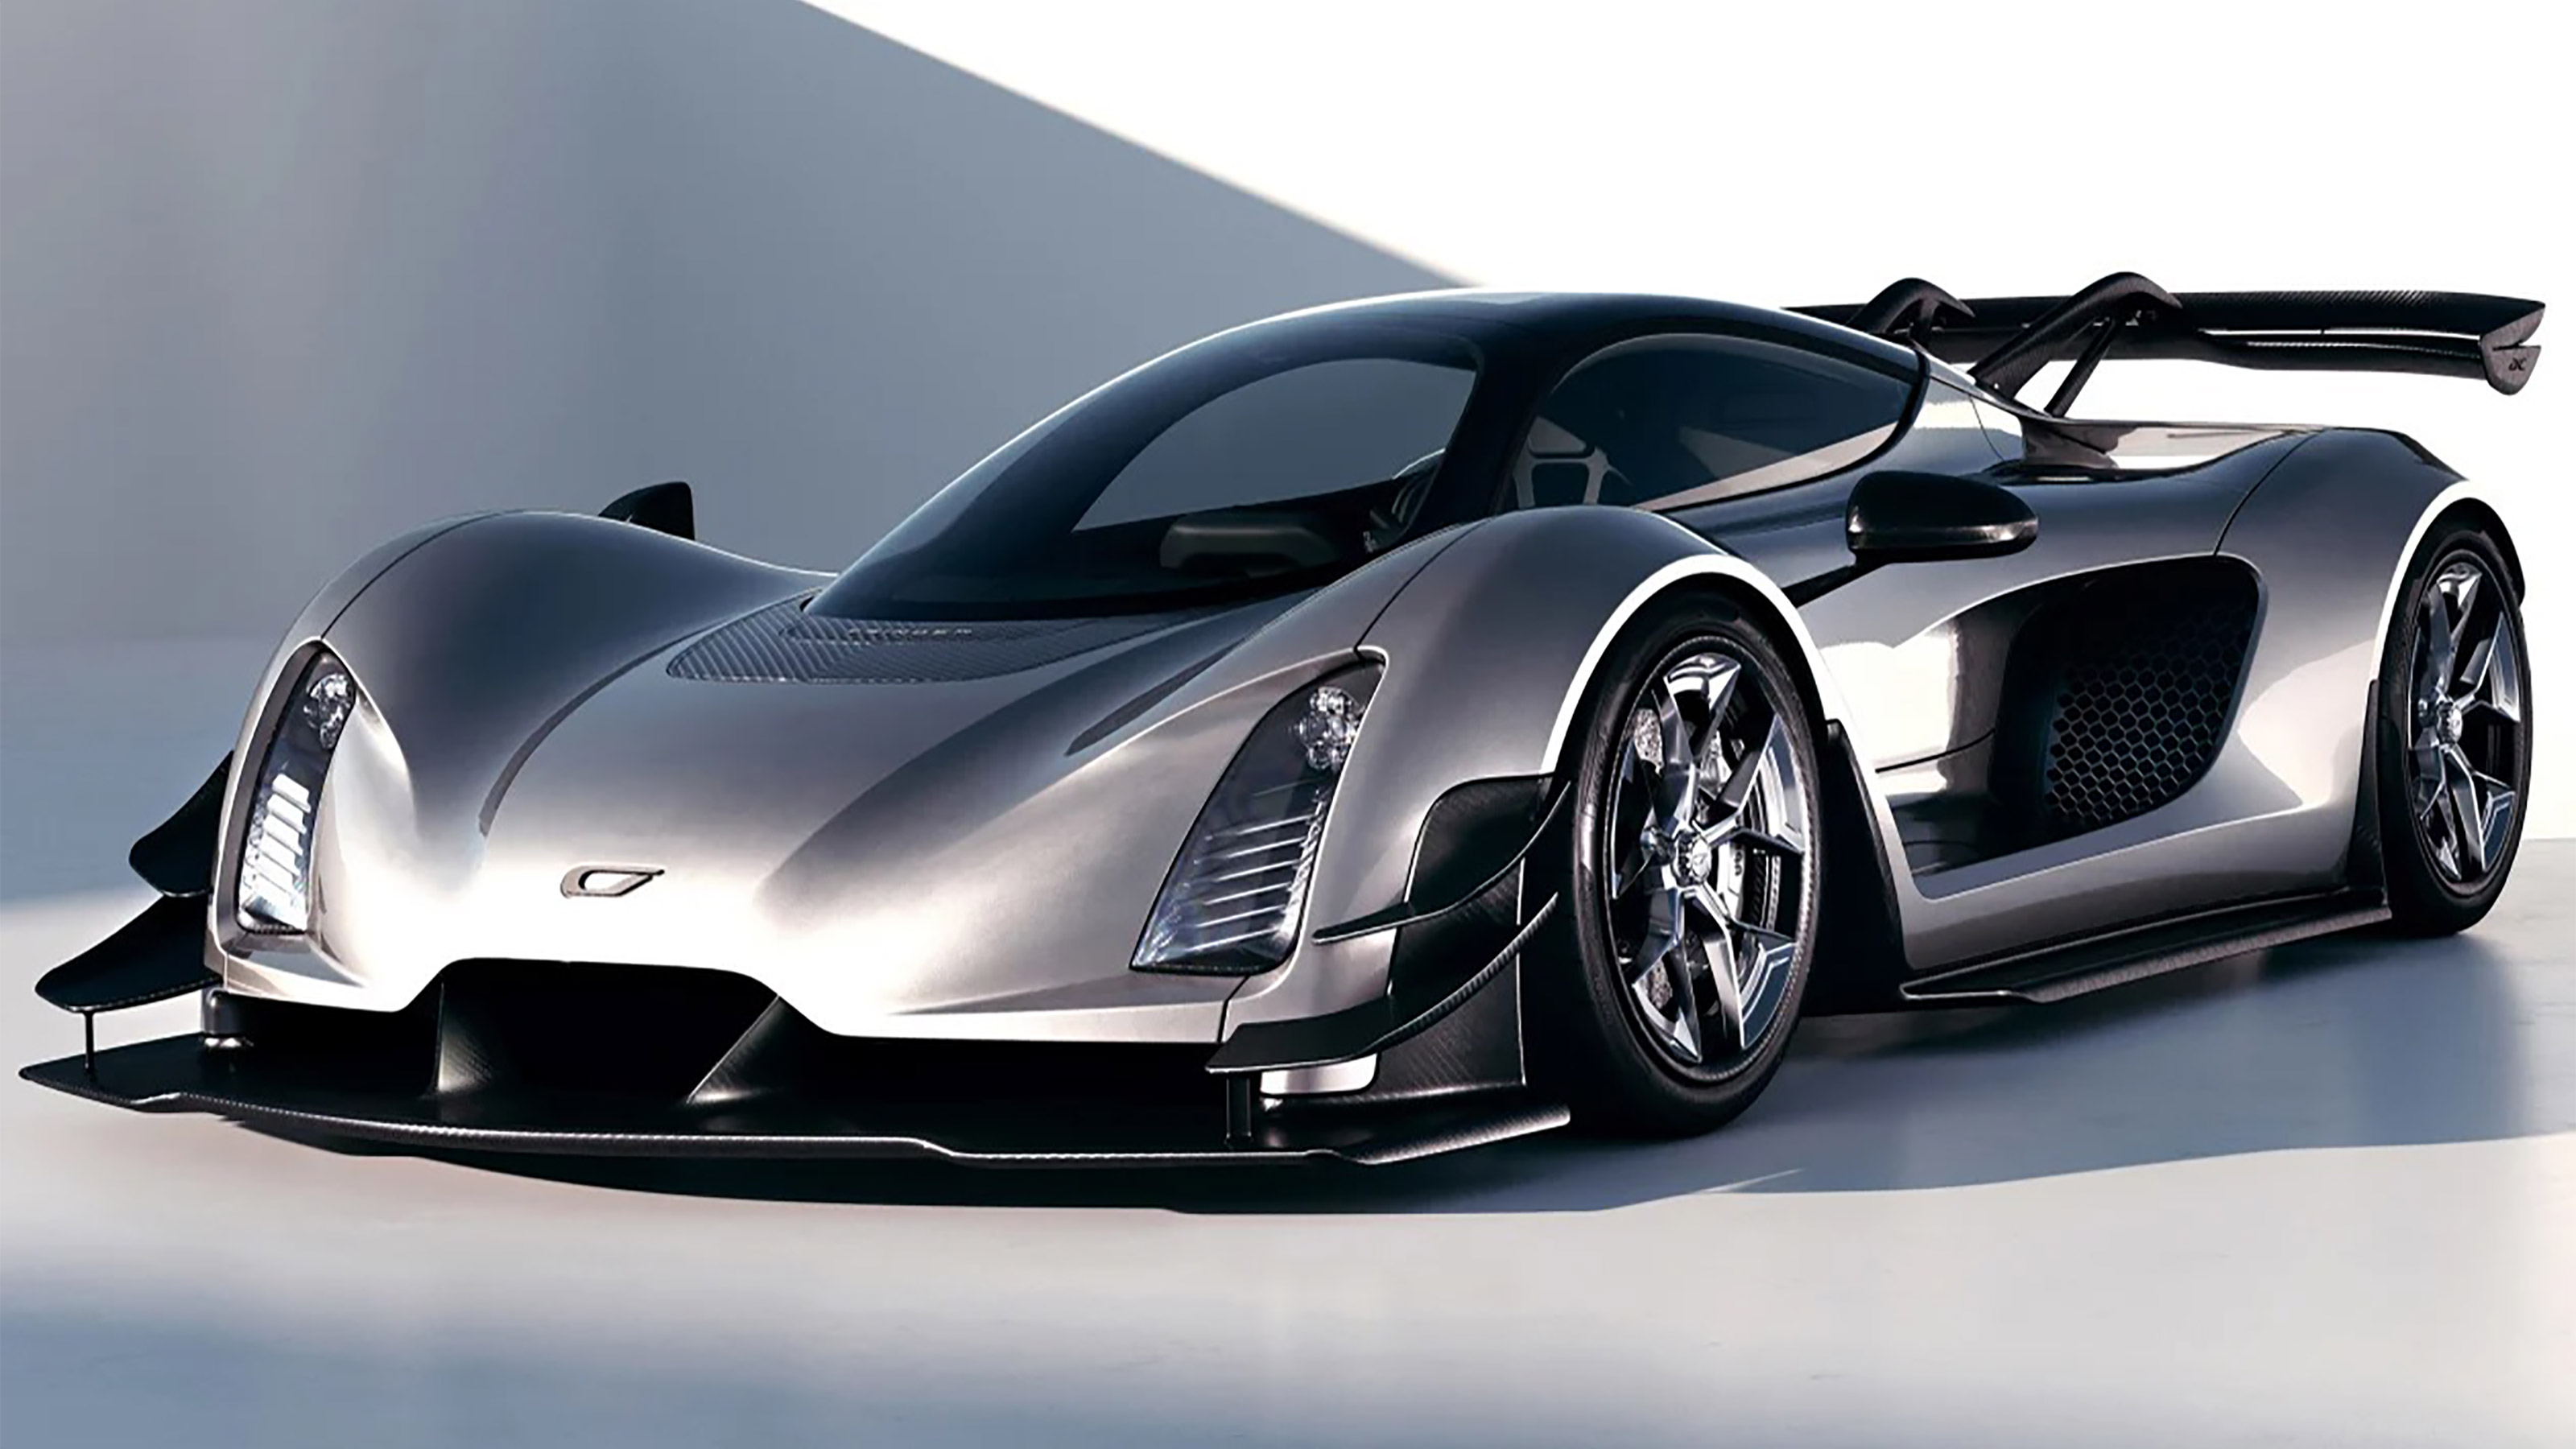 Hyper Cars Market 2023 Precise Outlook-Ferrari, Porsche, Automobili ...